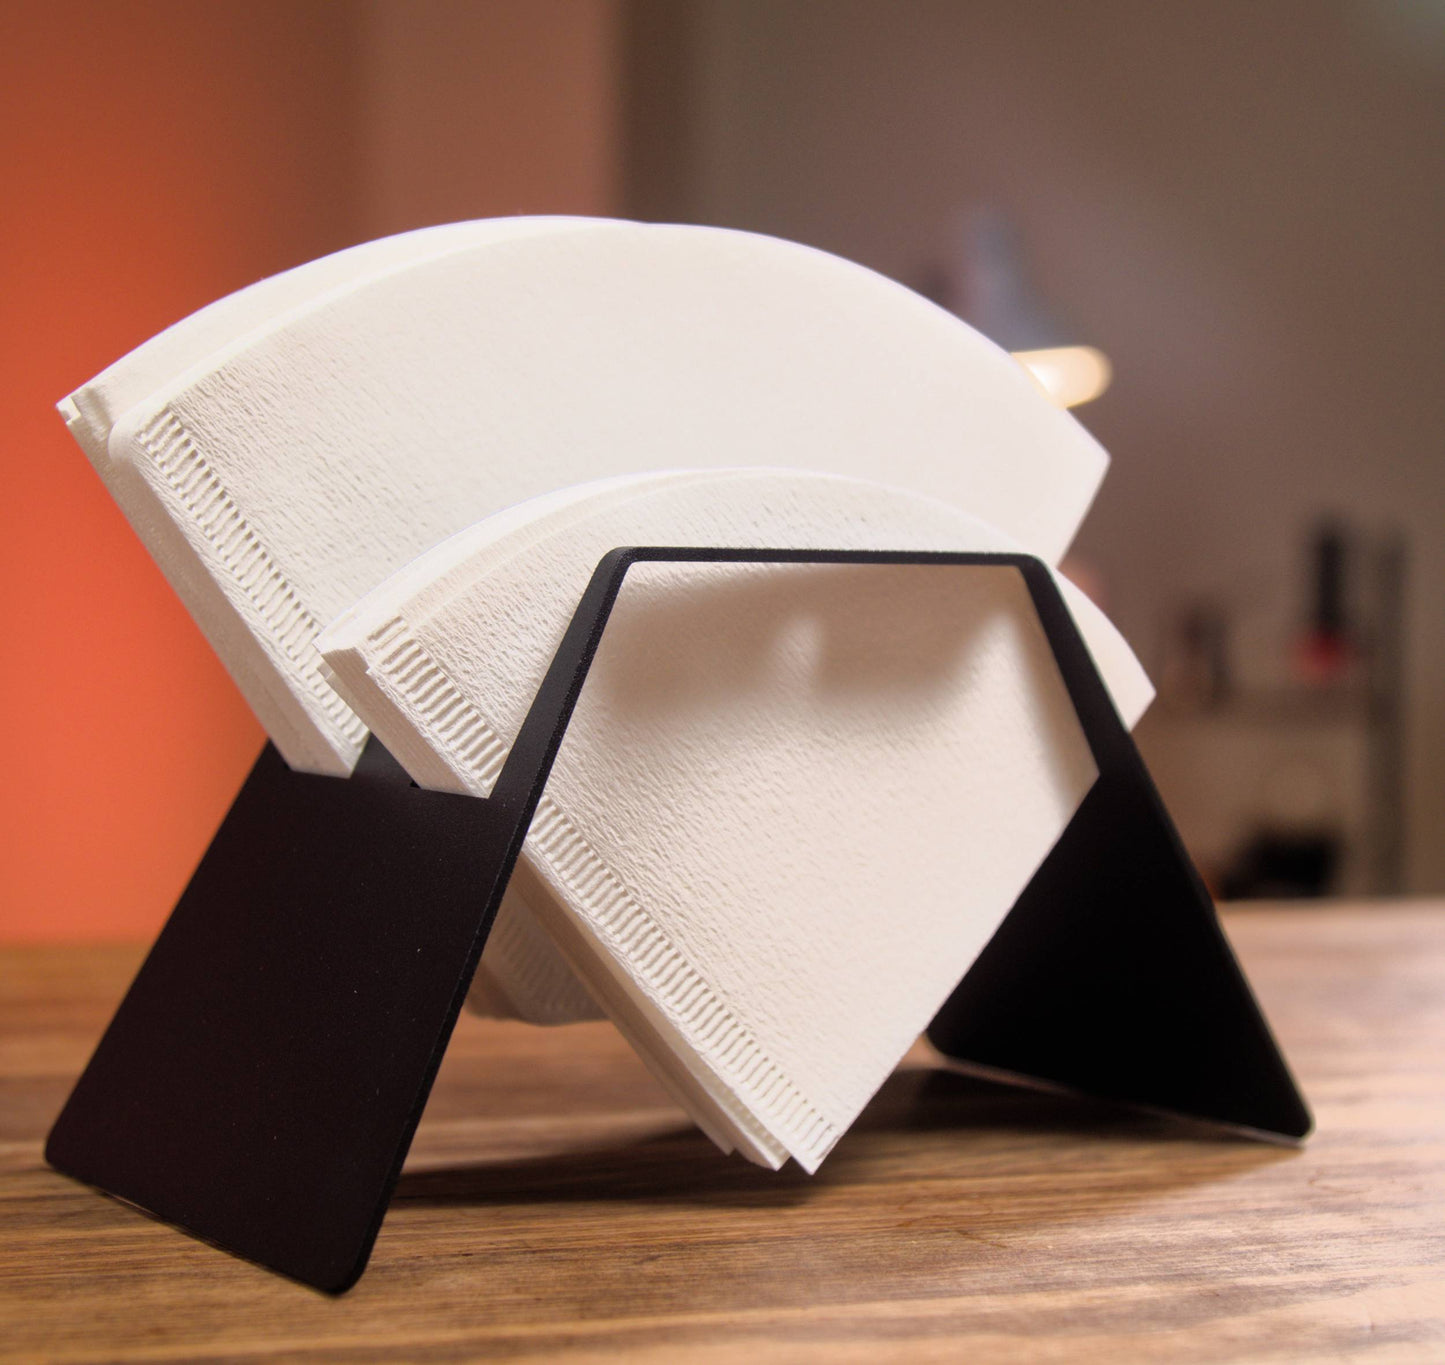 Metal Coffee Filter Holder "Samurai" - For Chemex, Cone #4, V60 (02, 03) paper